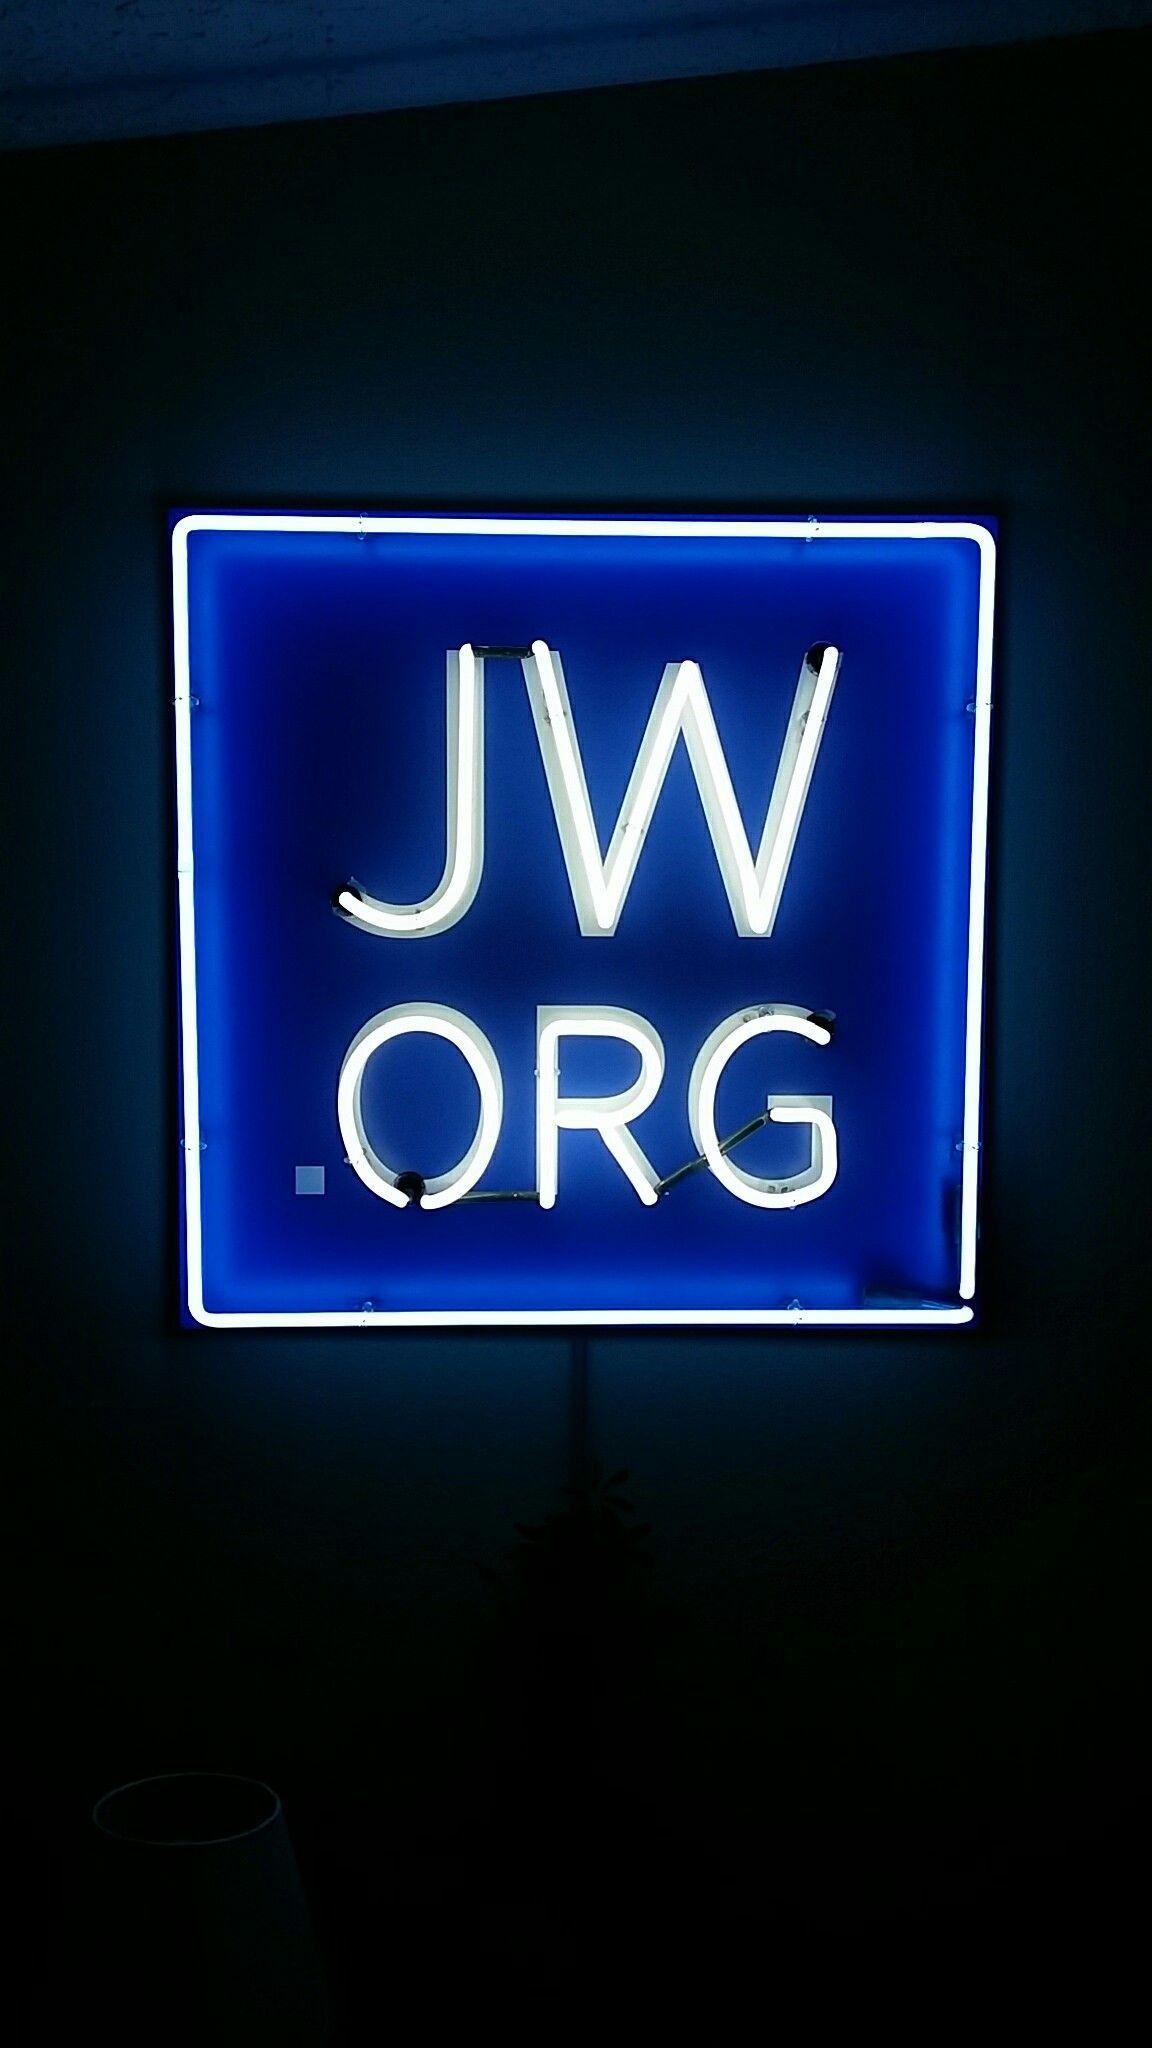 Jw.org Logo - Jw.org | JW.ORG LOGO | Stuff to buy, Logos